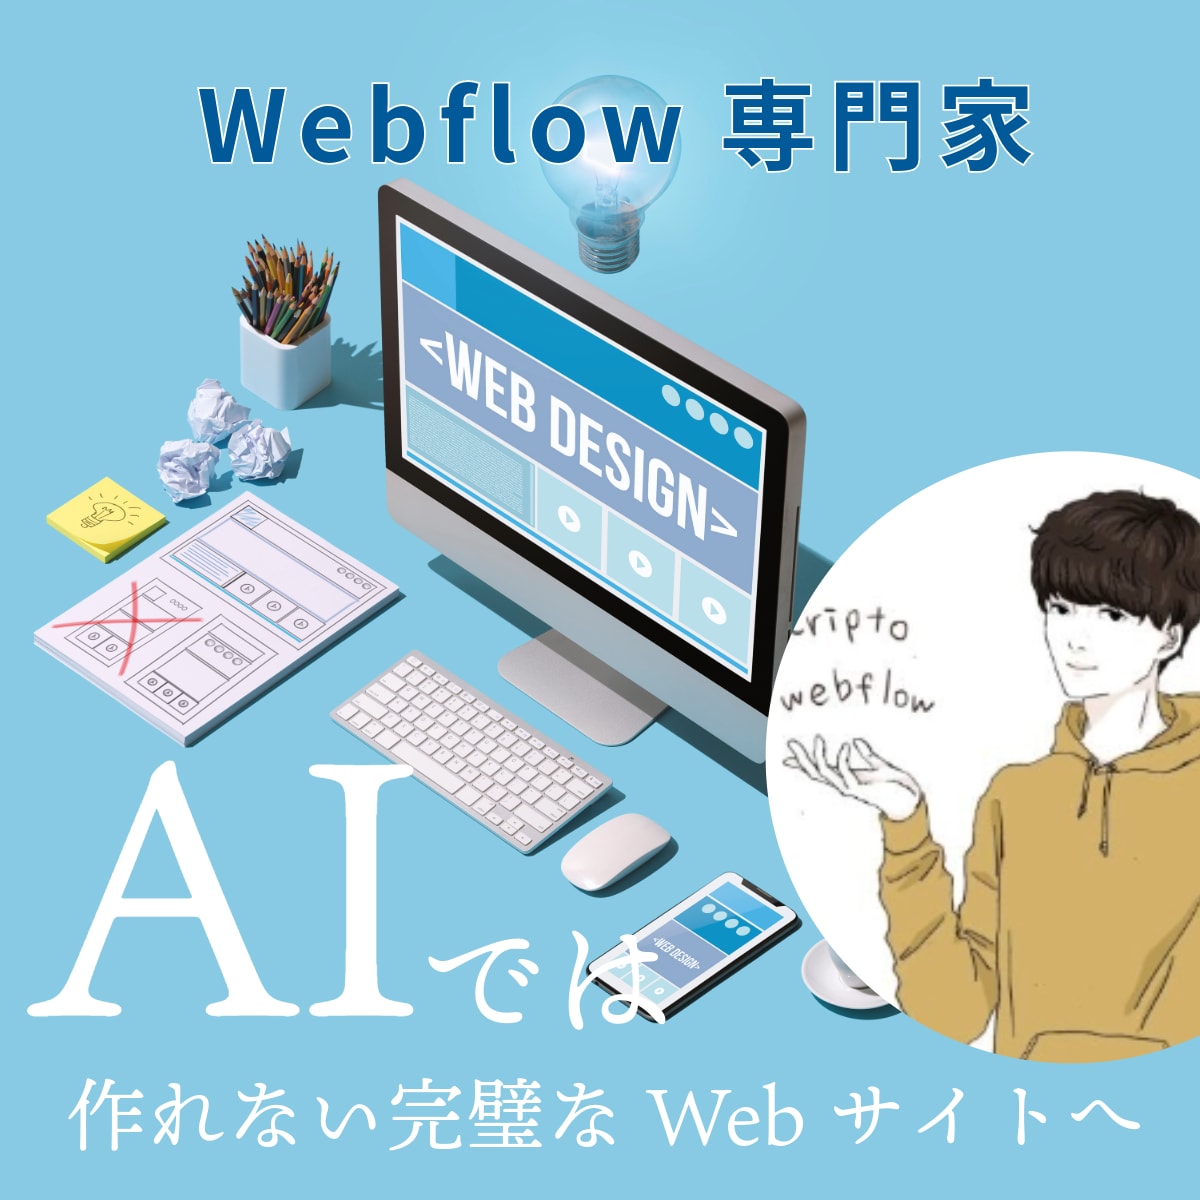 Webflow導入プラン/自己管理できます webflowを使って運用代行費を節約。 イメージ1